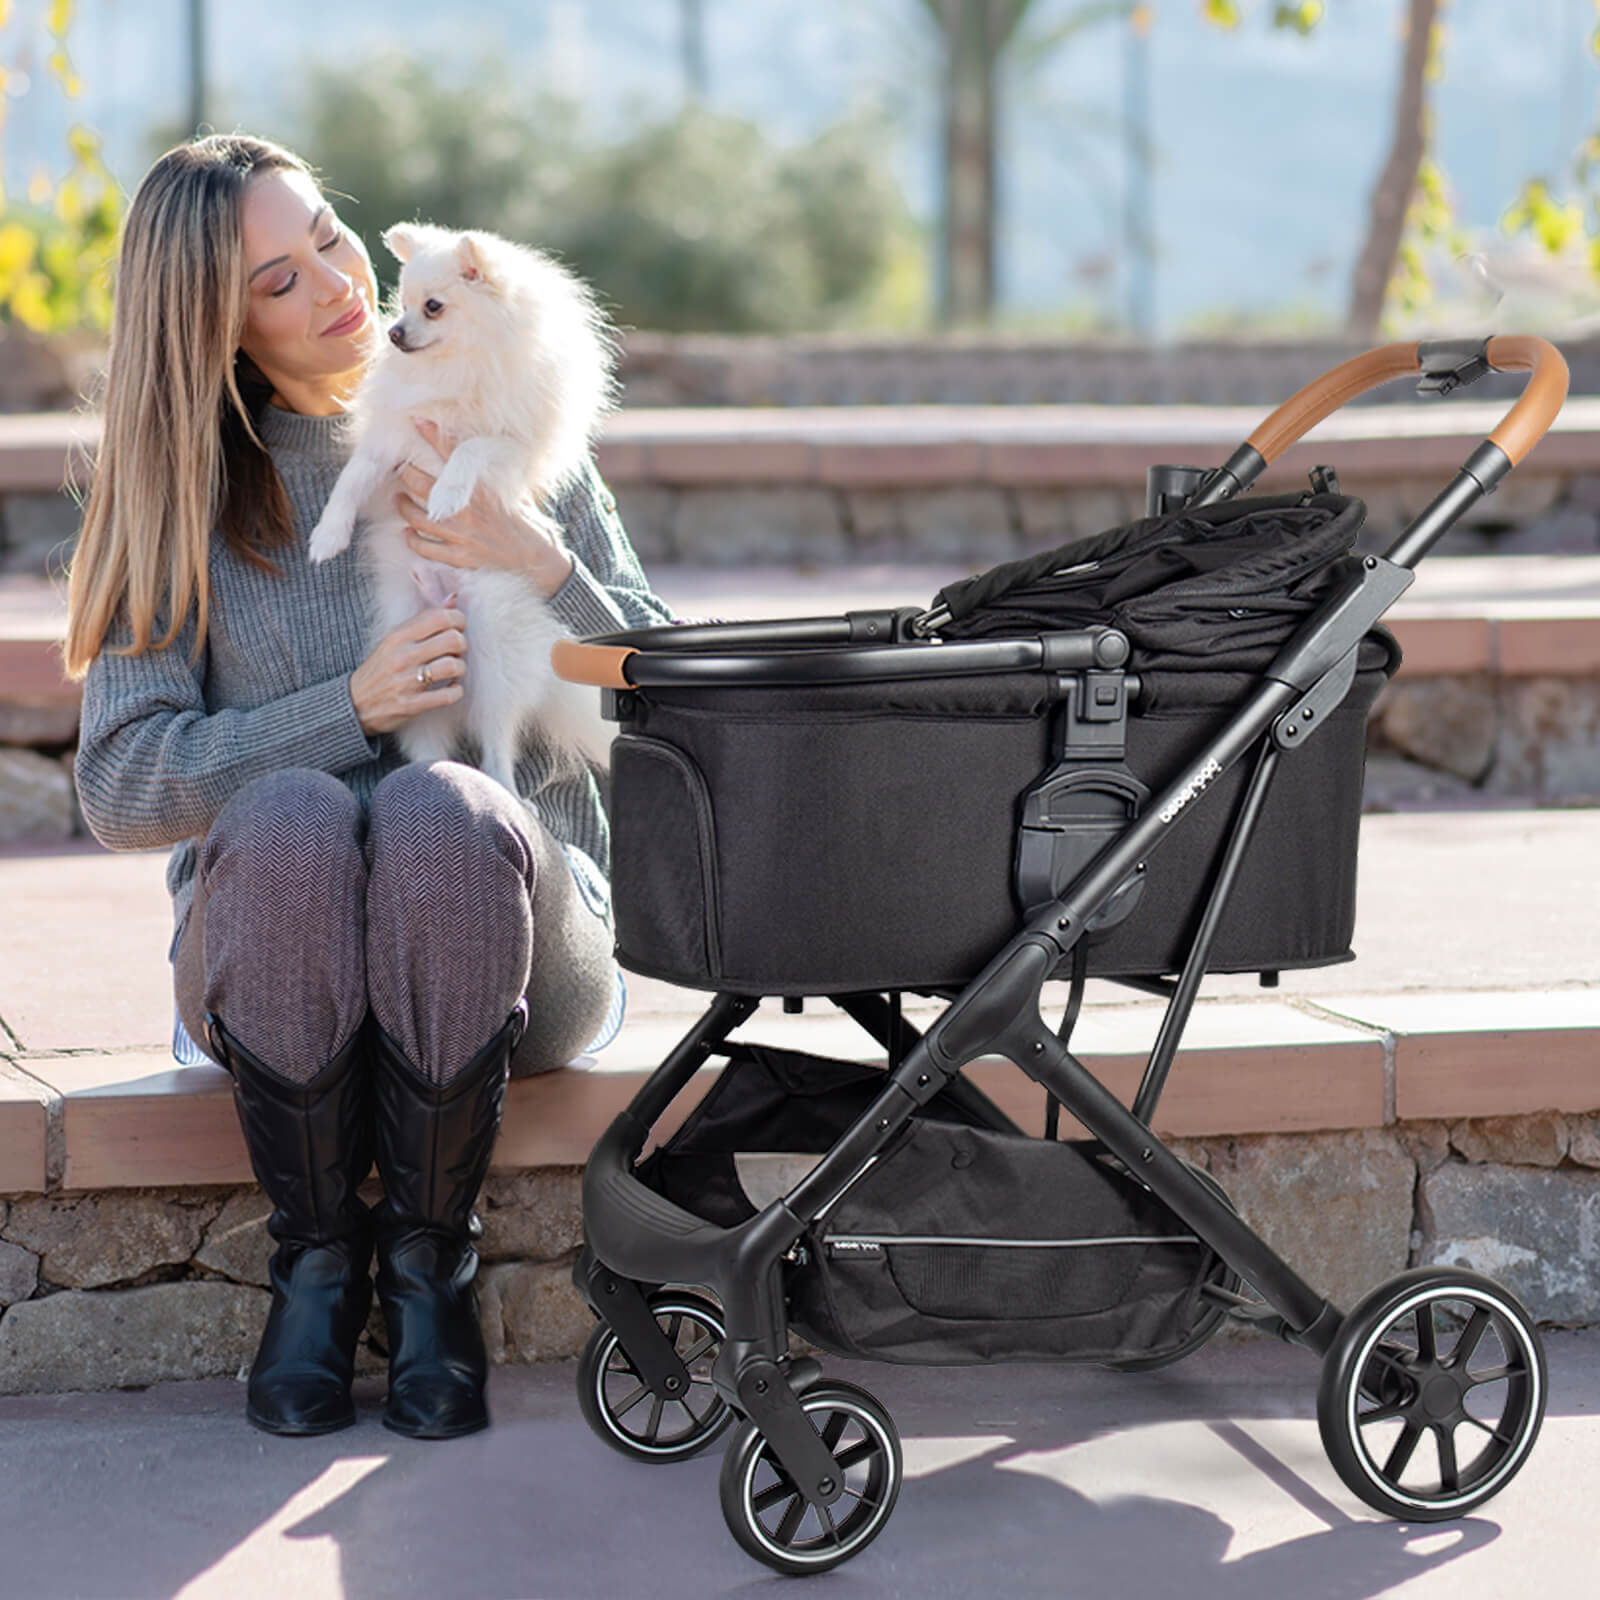 T6 Luxury Pet Stroller for Medium Dog Under 66lbs